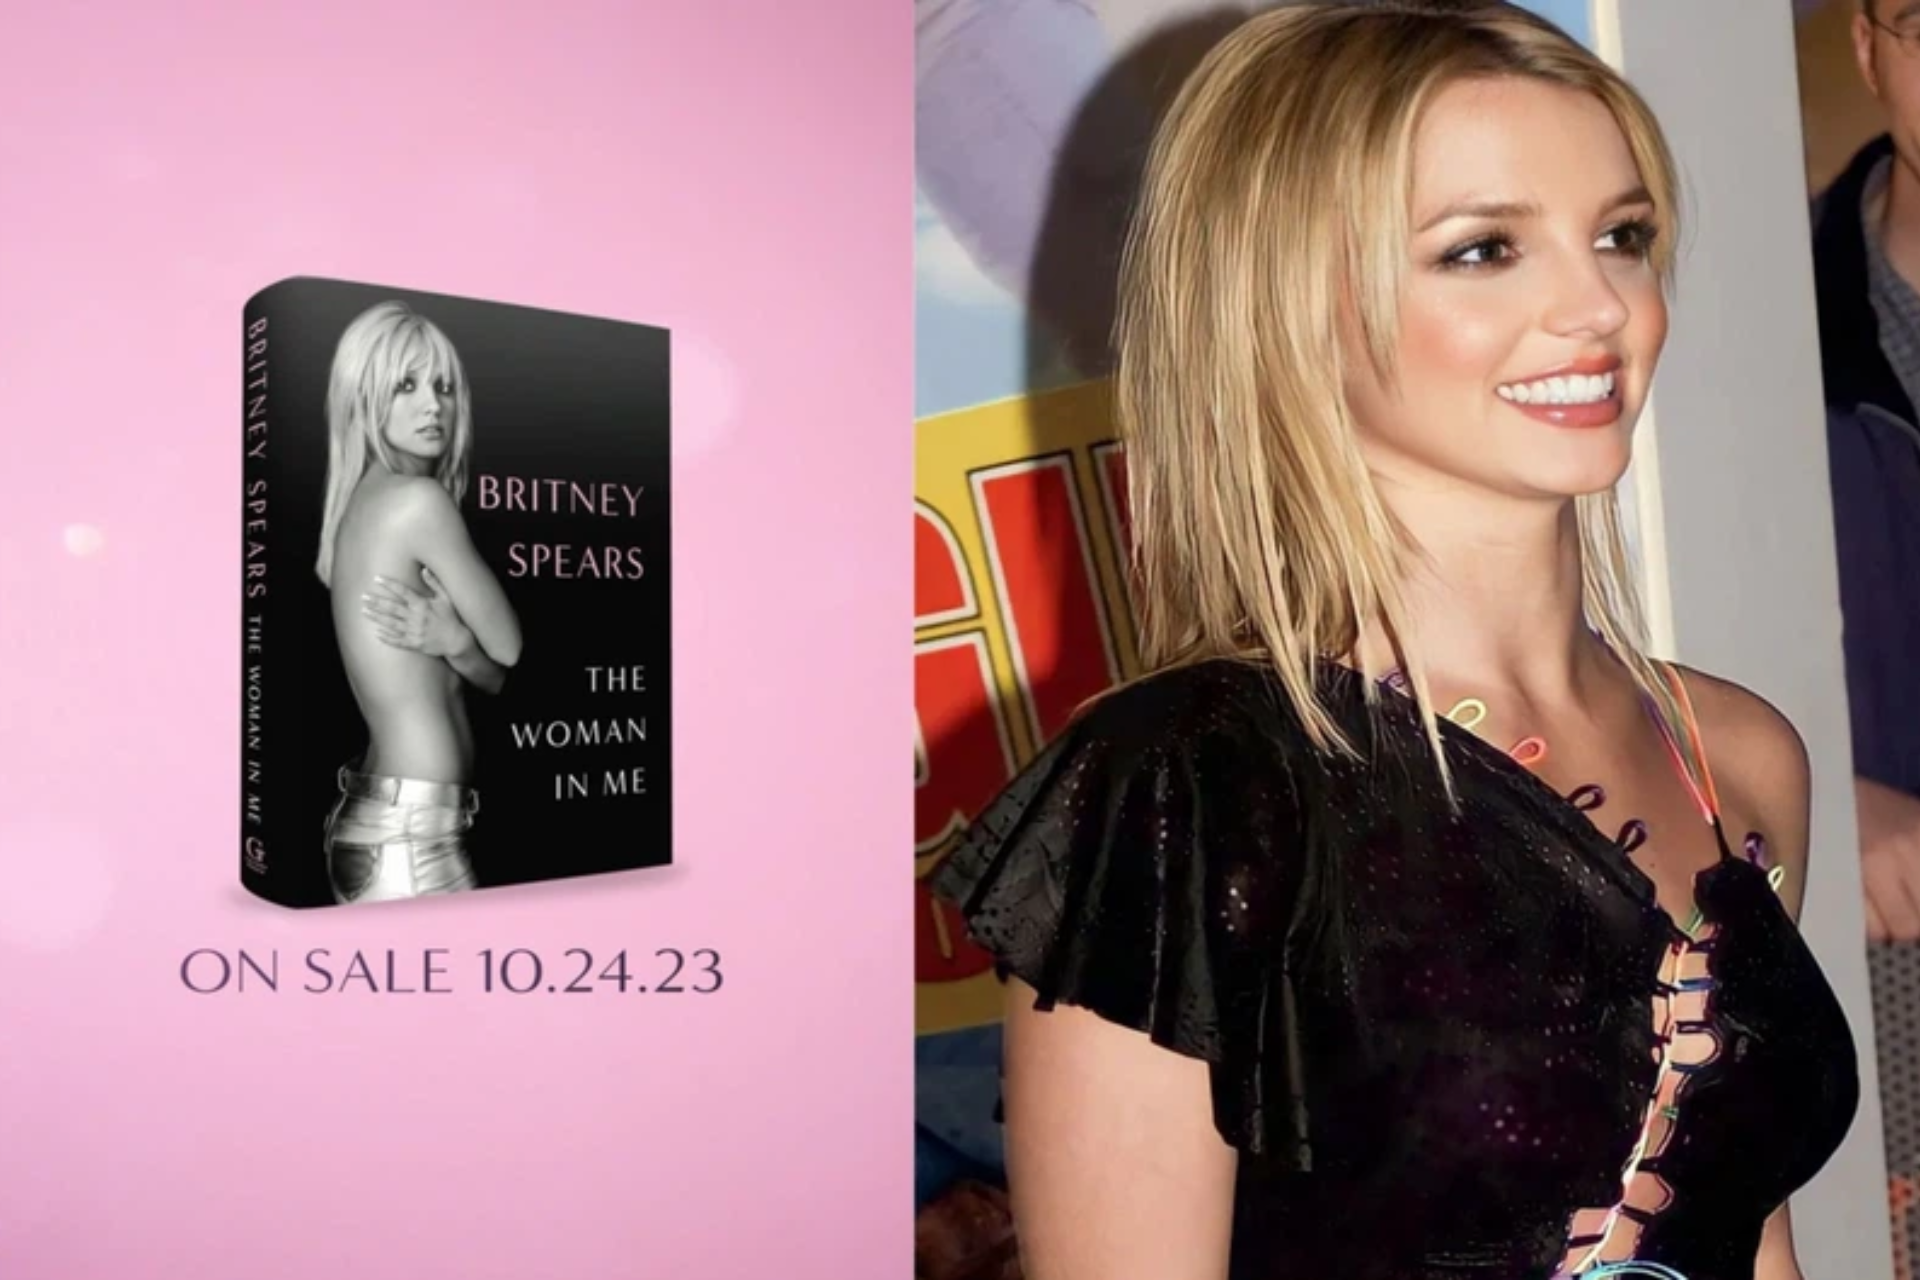 Britney Spears' memoir